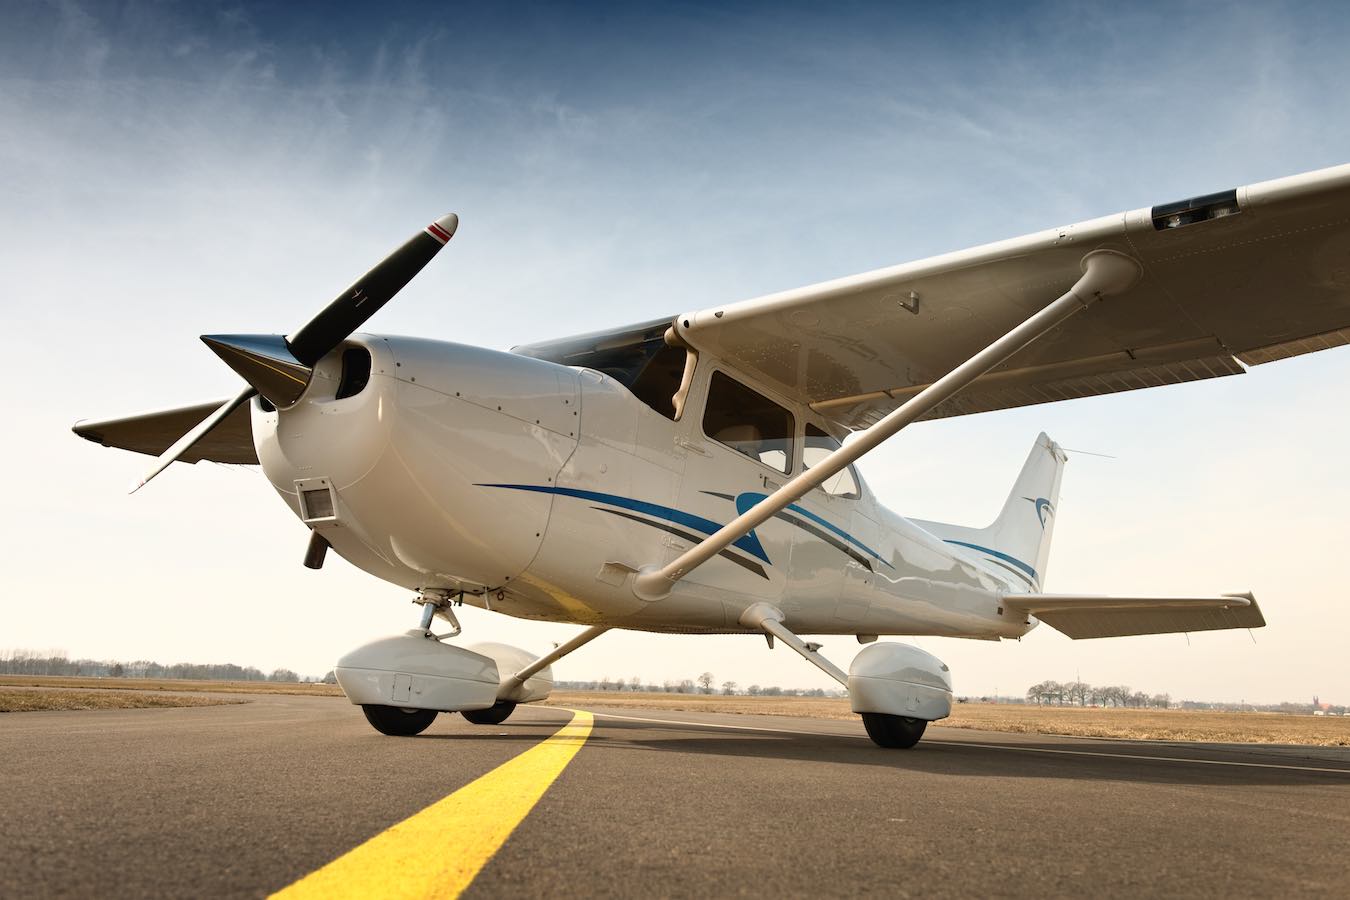 Cessna 172 - World Record Flight Endurance